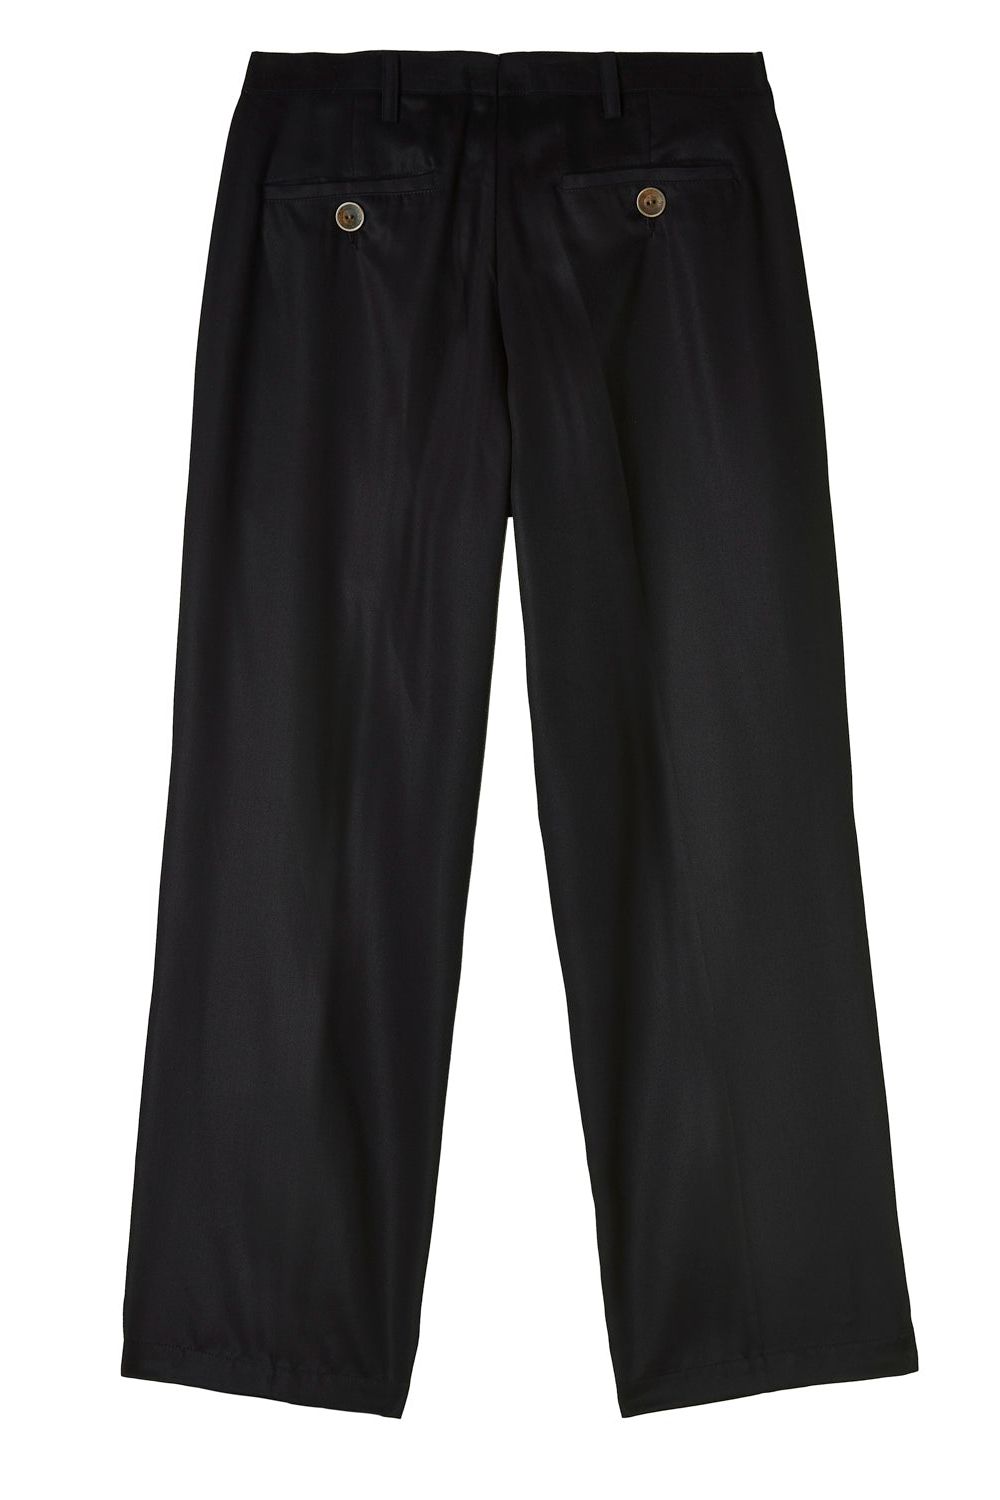 Elevated Essentials - Wide Fit Black Pants